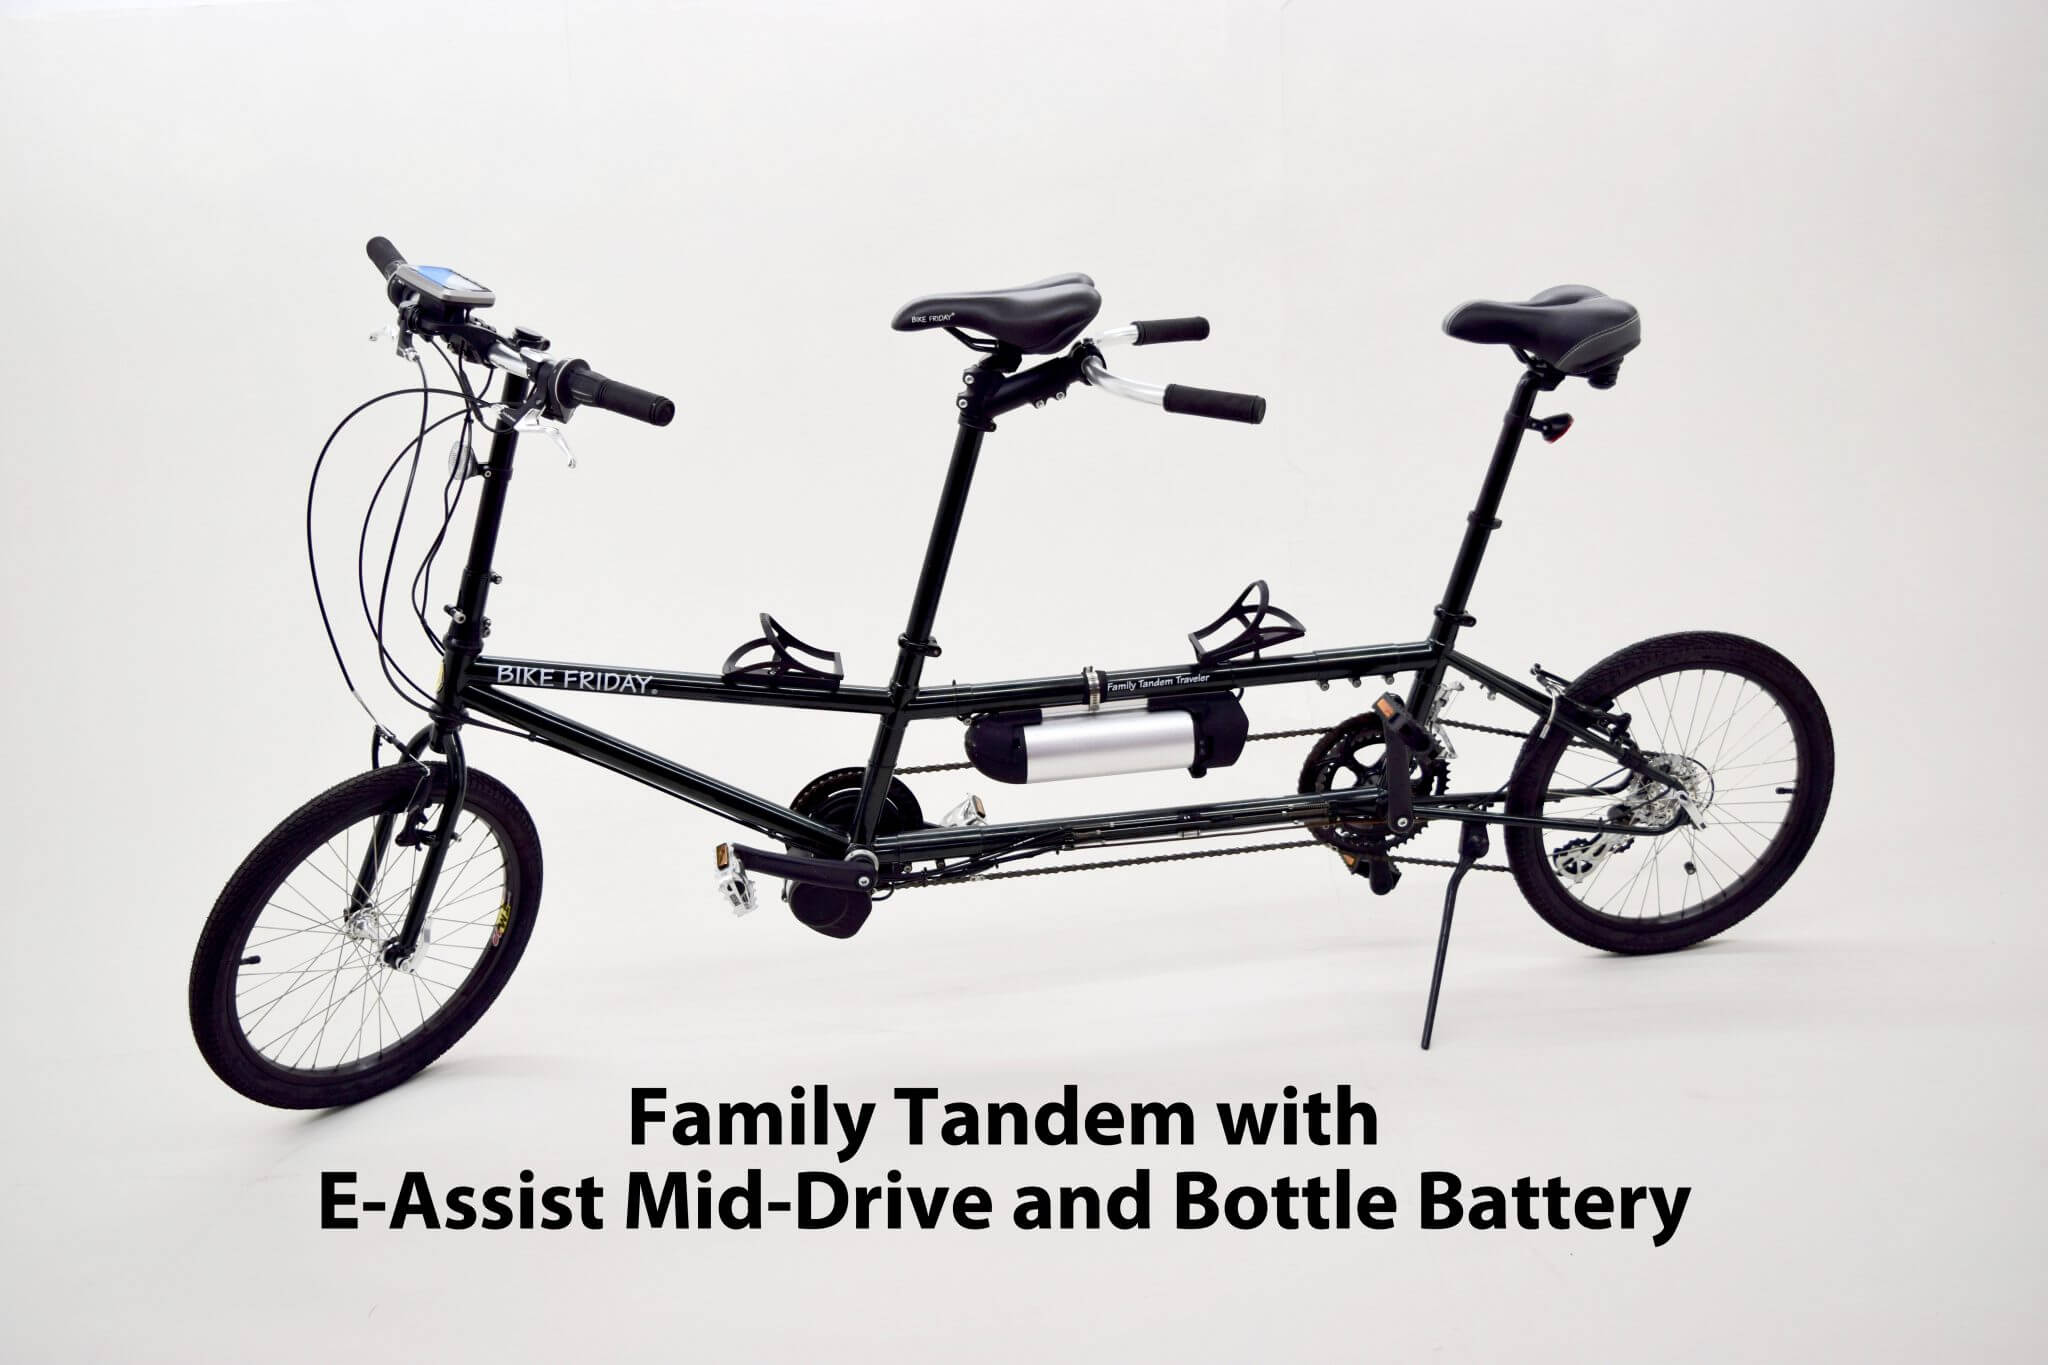 Bike Friday Family Tandem Travel Bike | Bike Friday